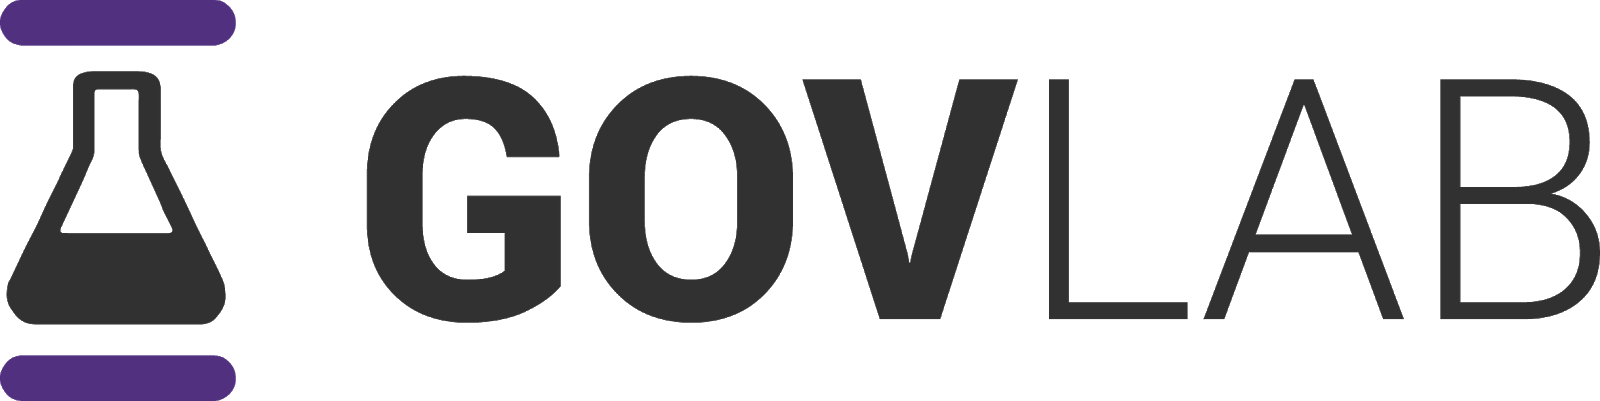 govlab-logo.png